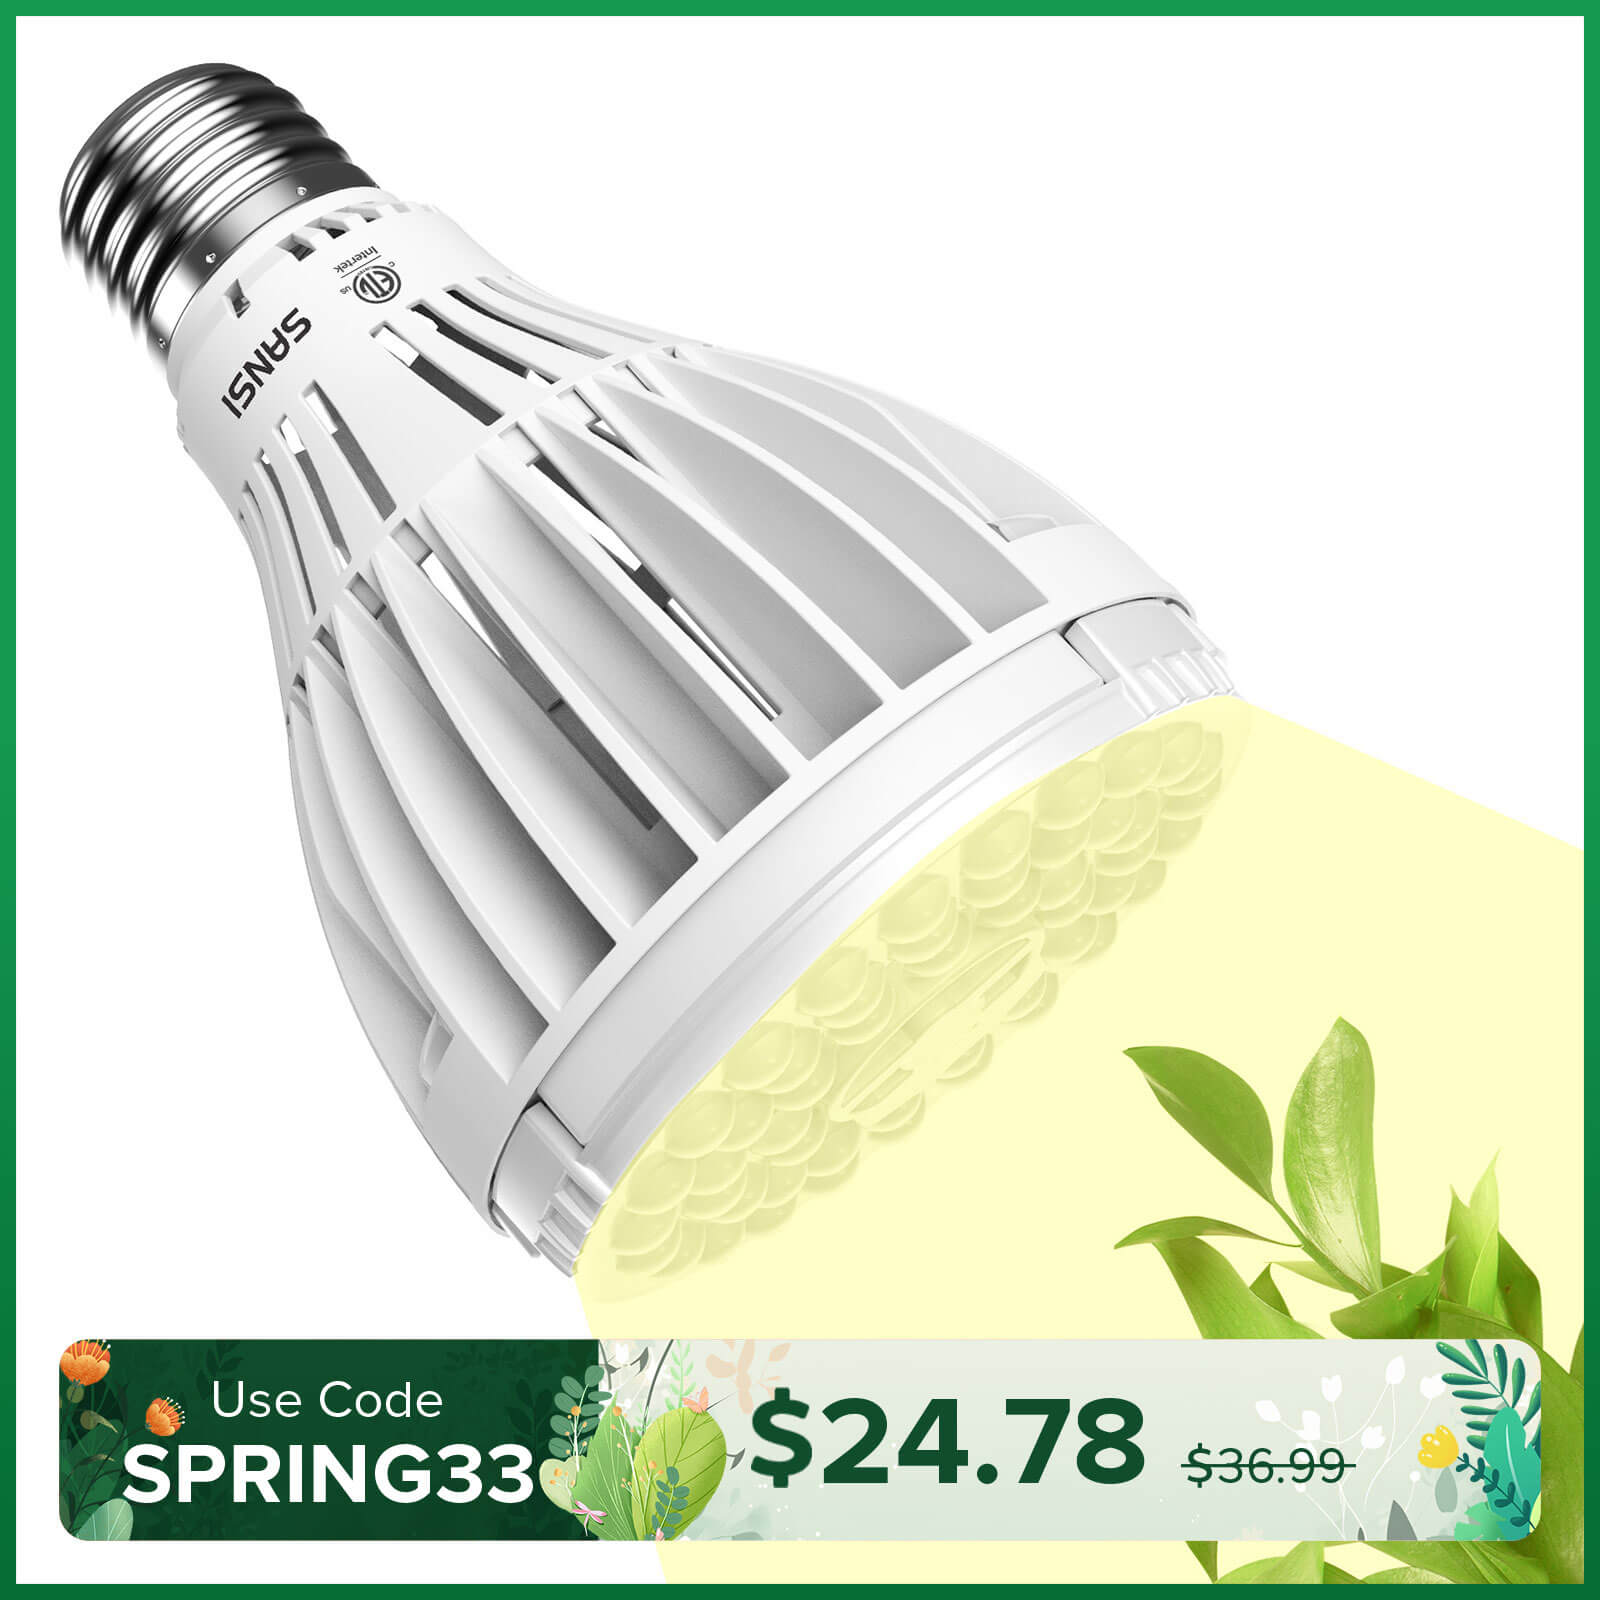 PAR25 32W LED Grow Light Bulb (US ONLY)